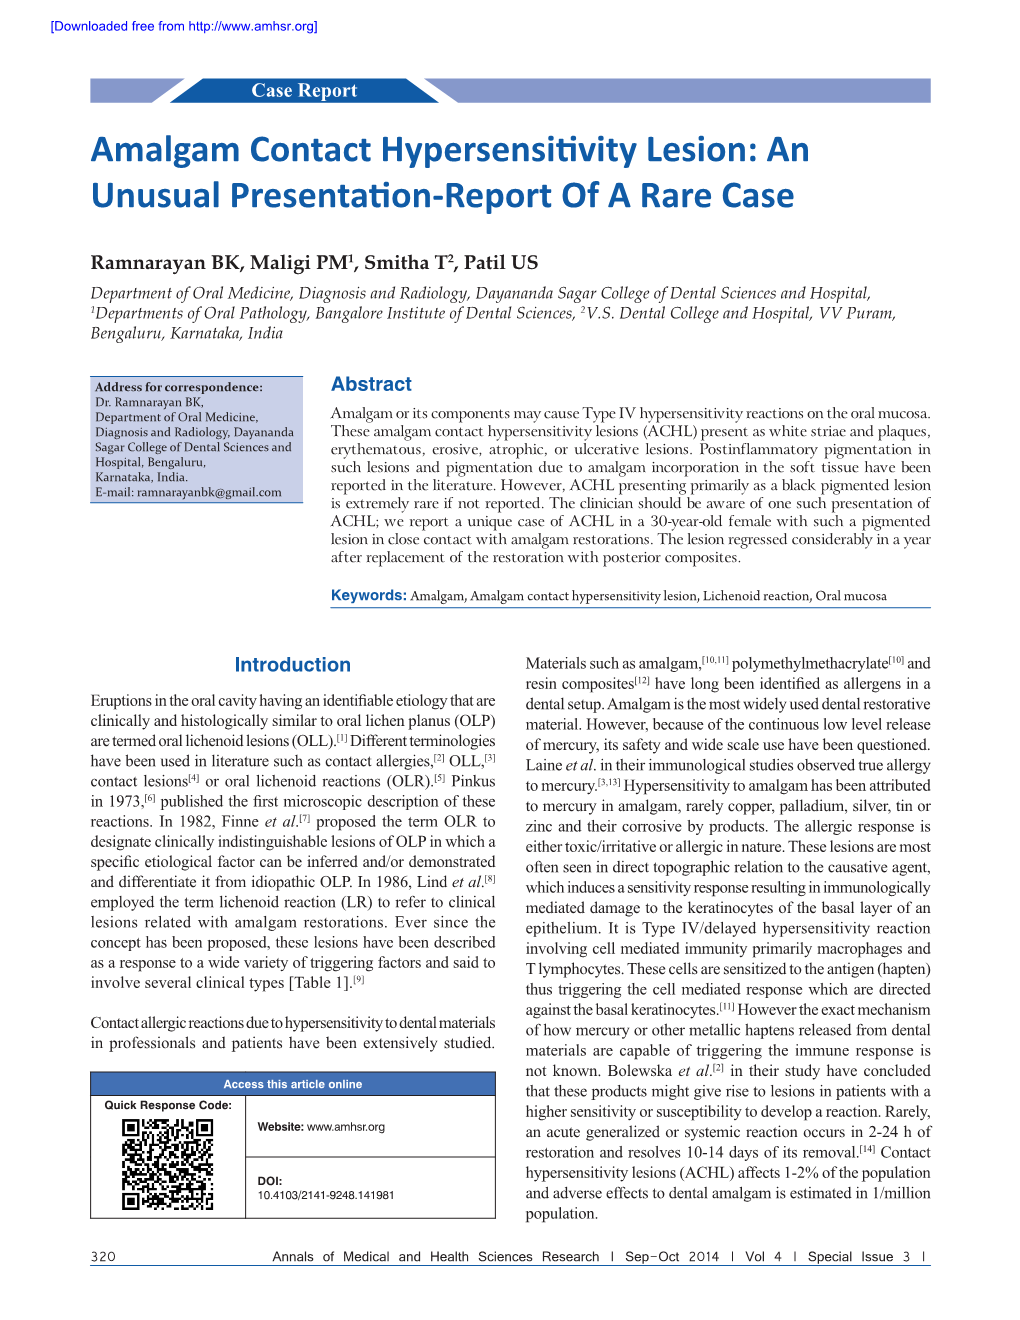 Amalgam Contact Hypersensitivity Lesion: an Unusual Presentation-Report of a Rare Case